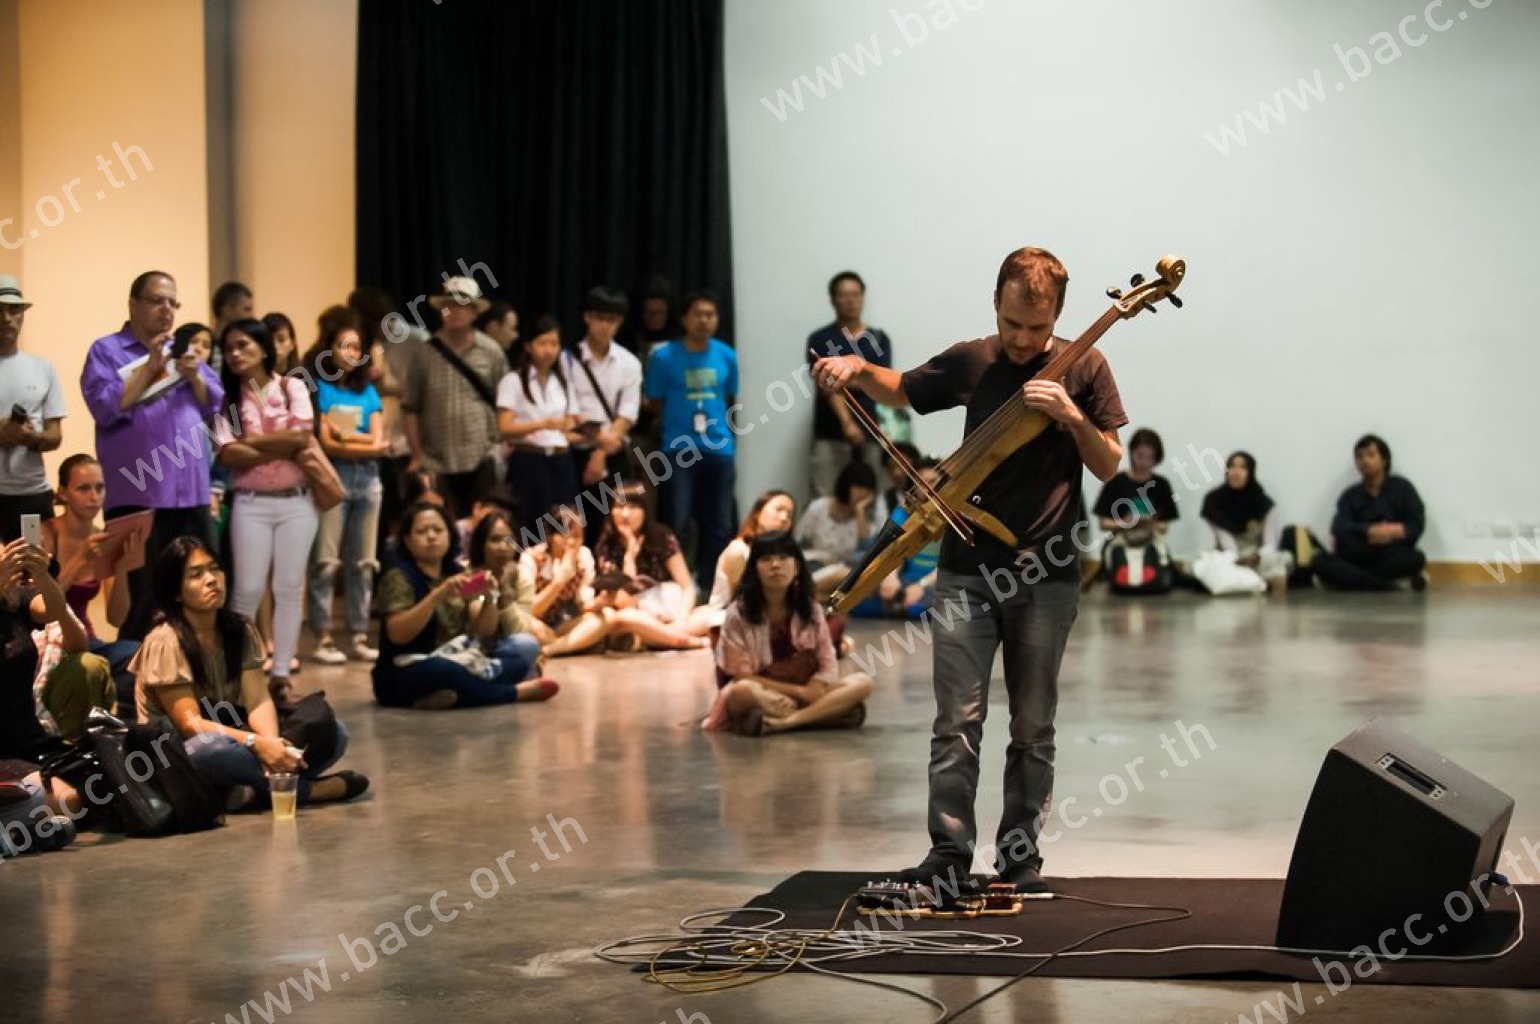 ASIATOPIA International Performance Art Festival #16 / 2014